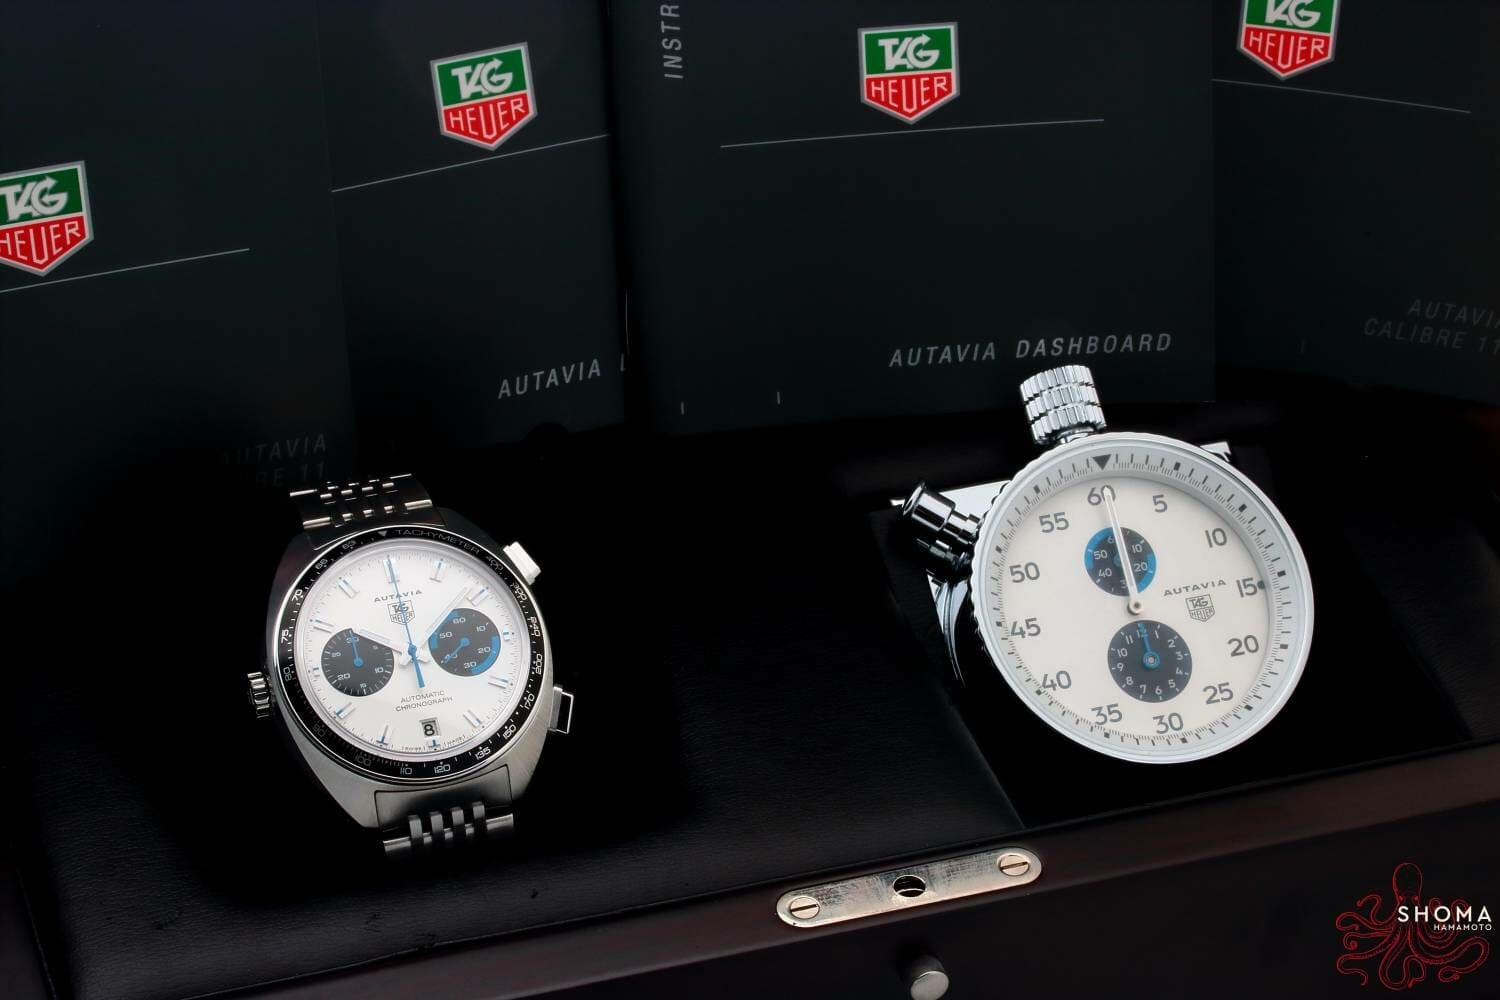 Limited edition Tag Heuer Autavia "Siffert" wristwatch and dashboard set, ref CY2110 - Shoma Hamamoto